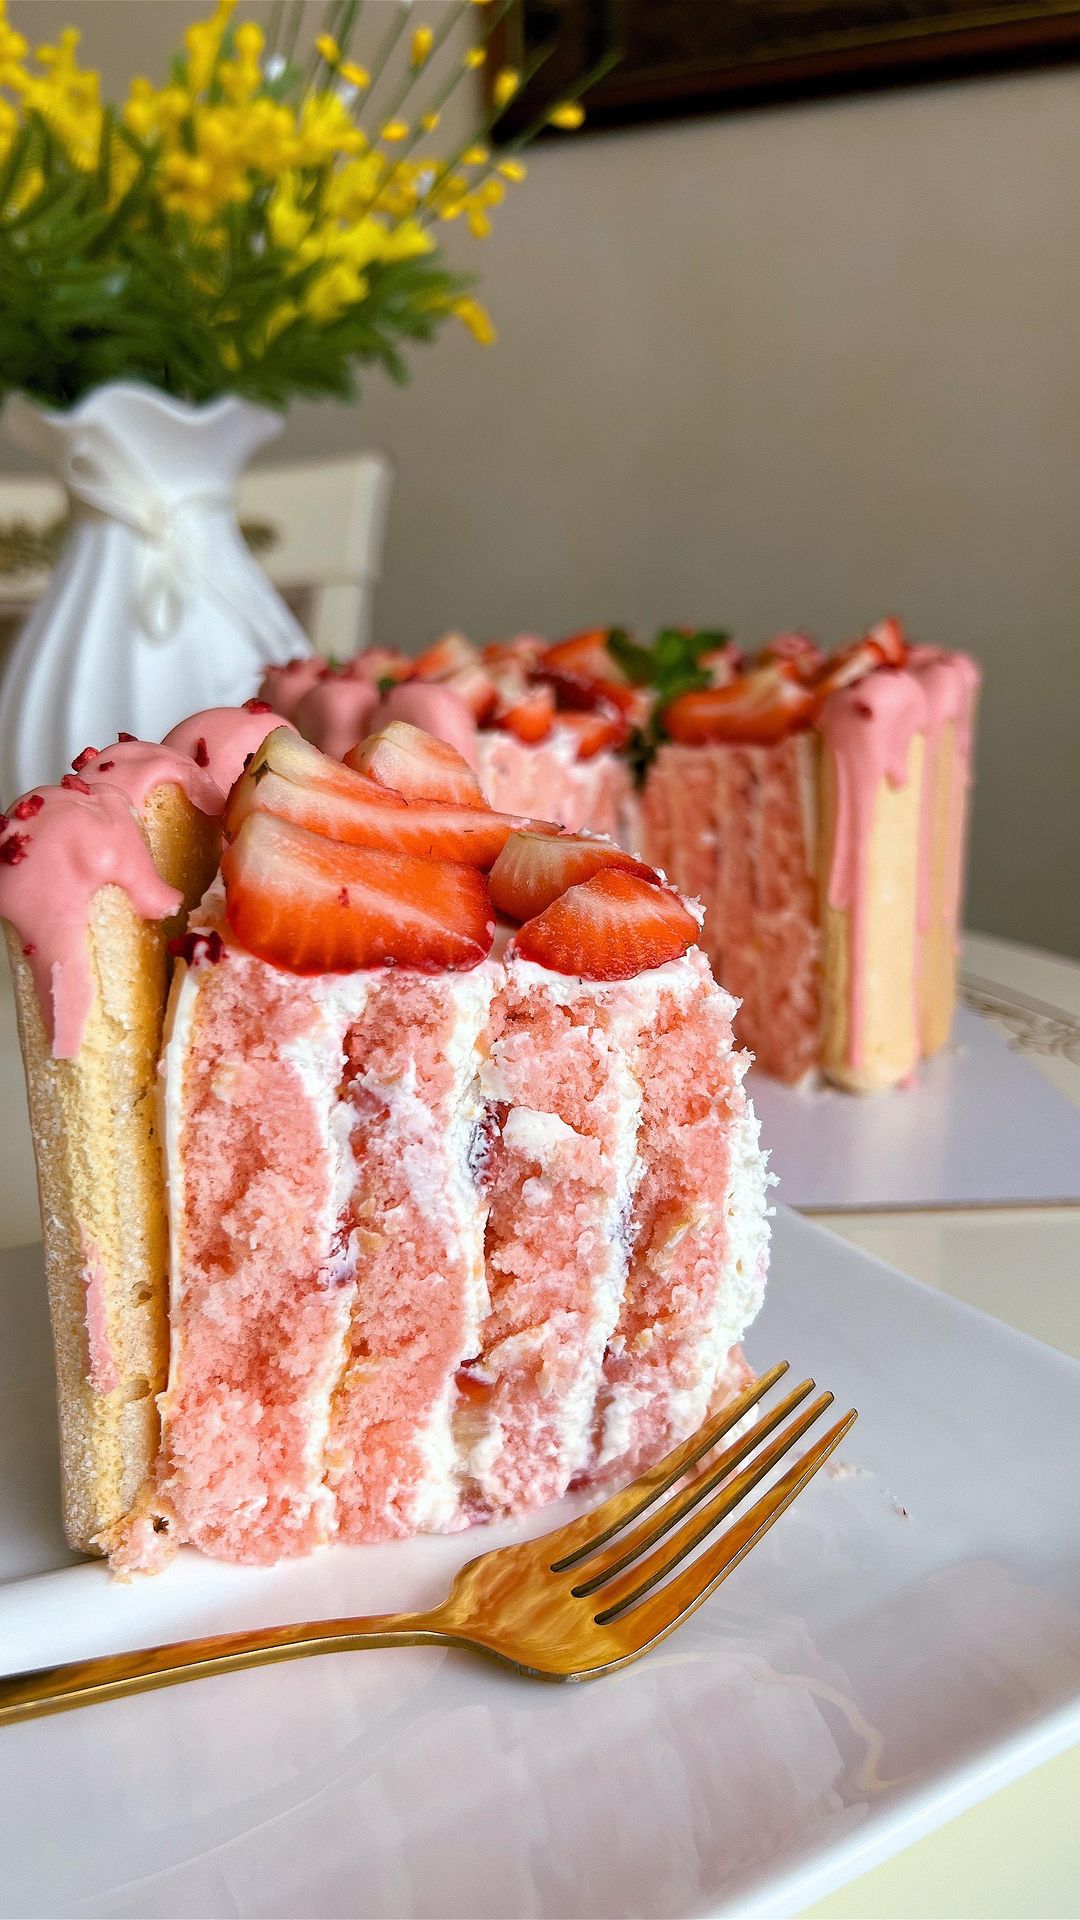 Delicious Strawberry Cake